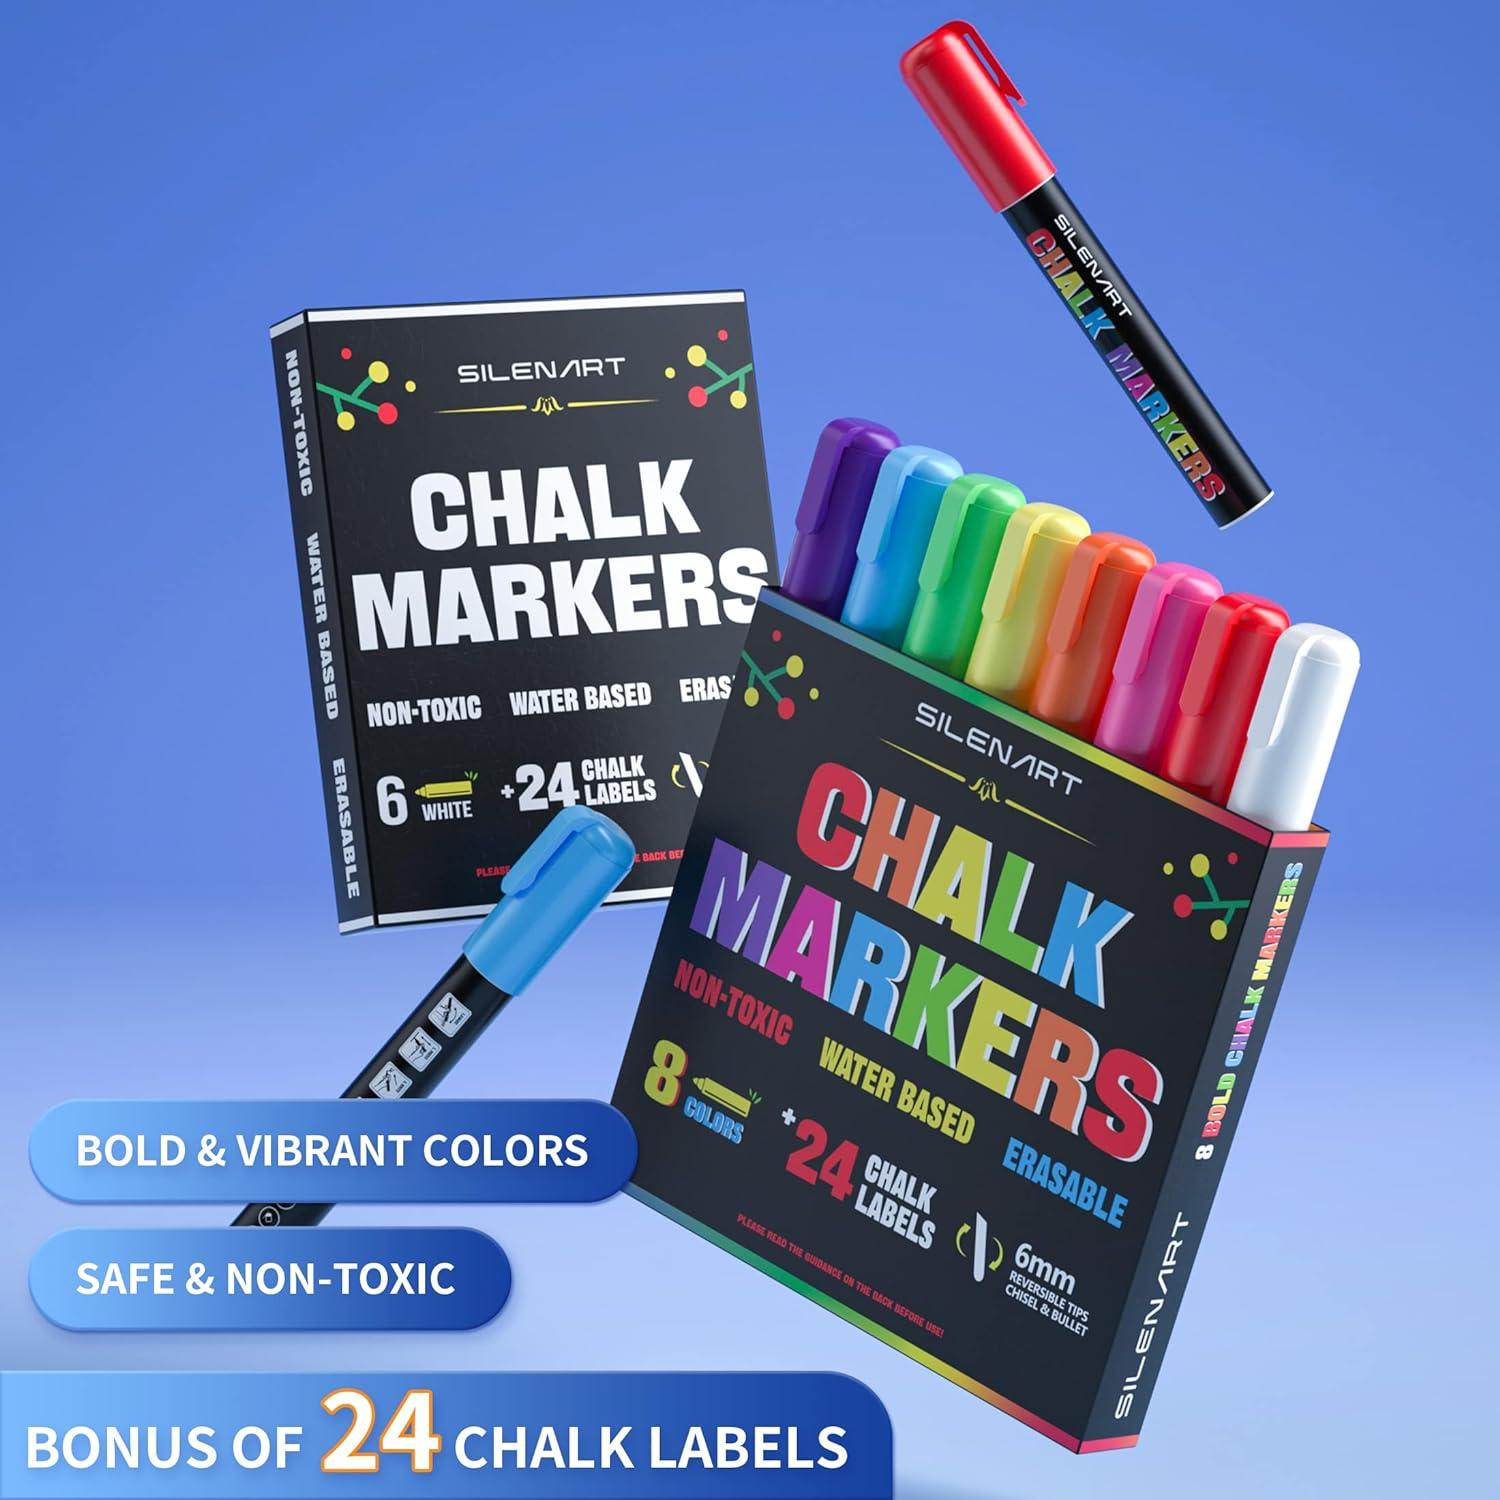  Liquid Chalk Markers - Set of 8 6 mm Fine Tip Chalk